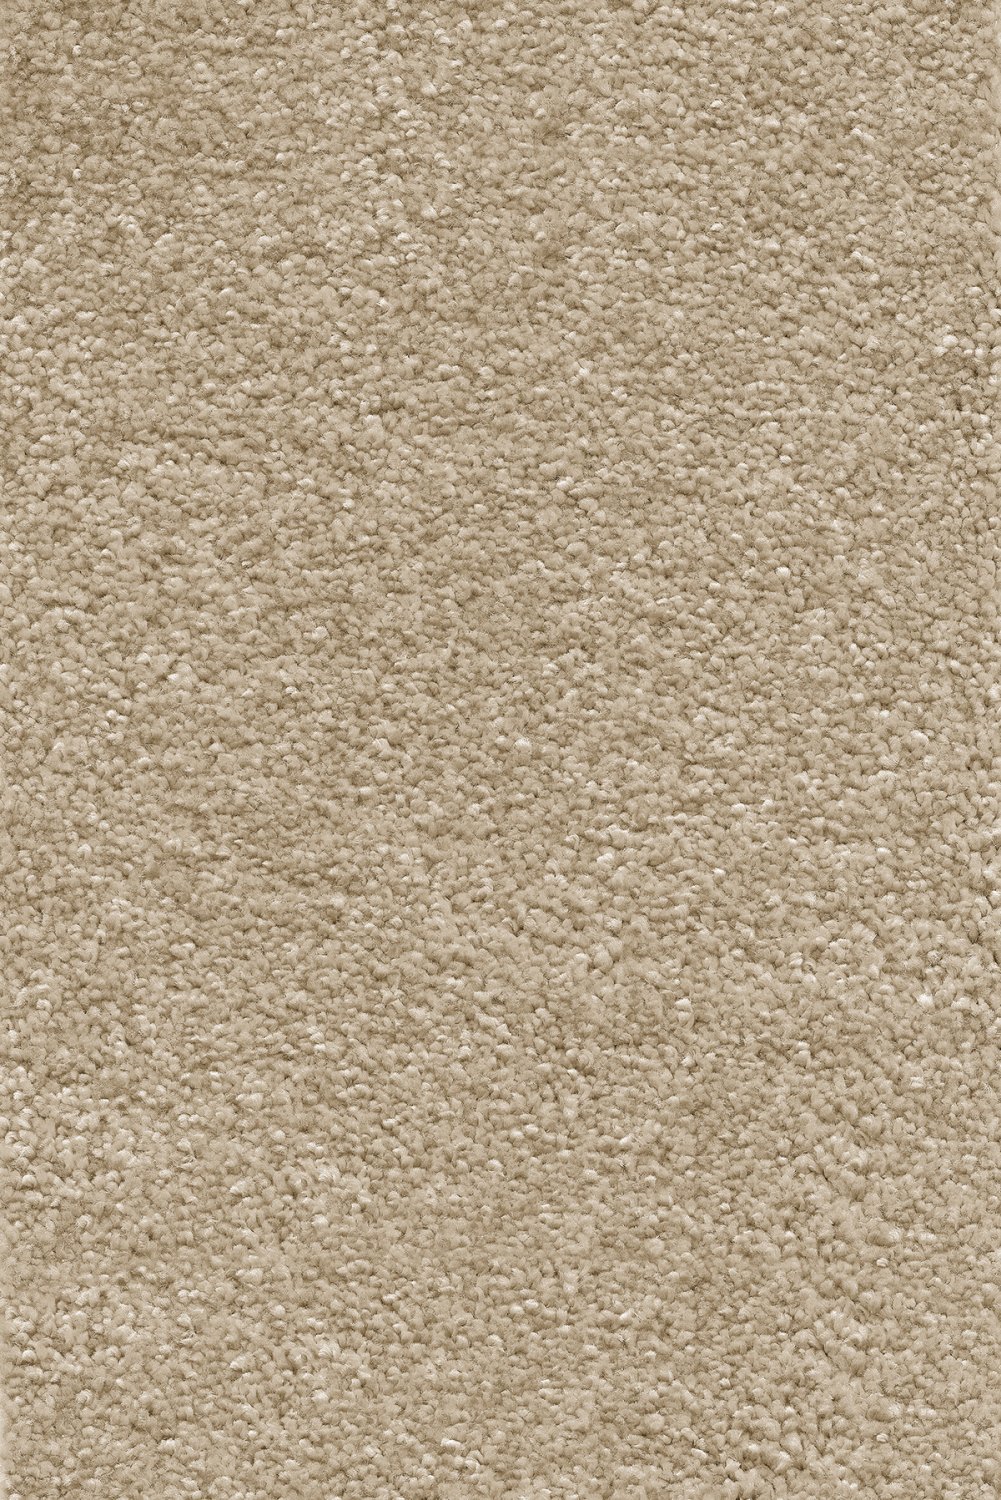 Stockholm Plains Saxony Carpet - Blanche White 30